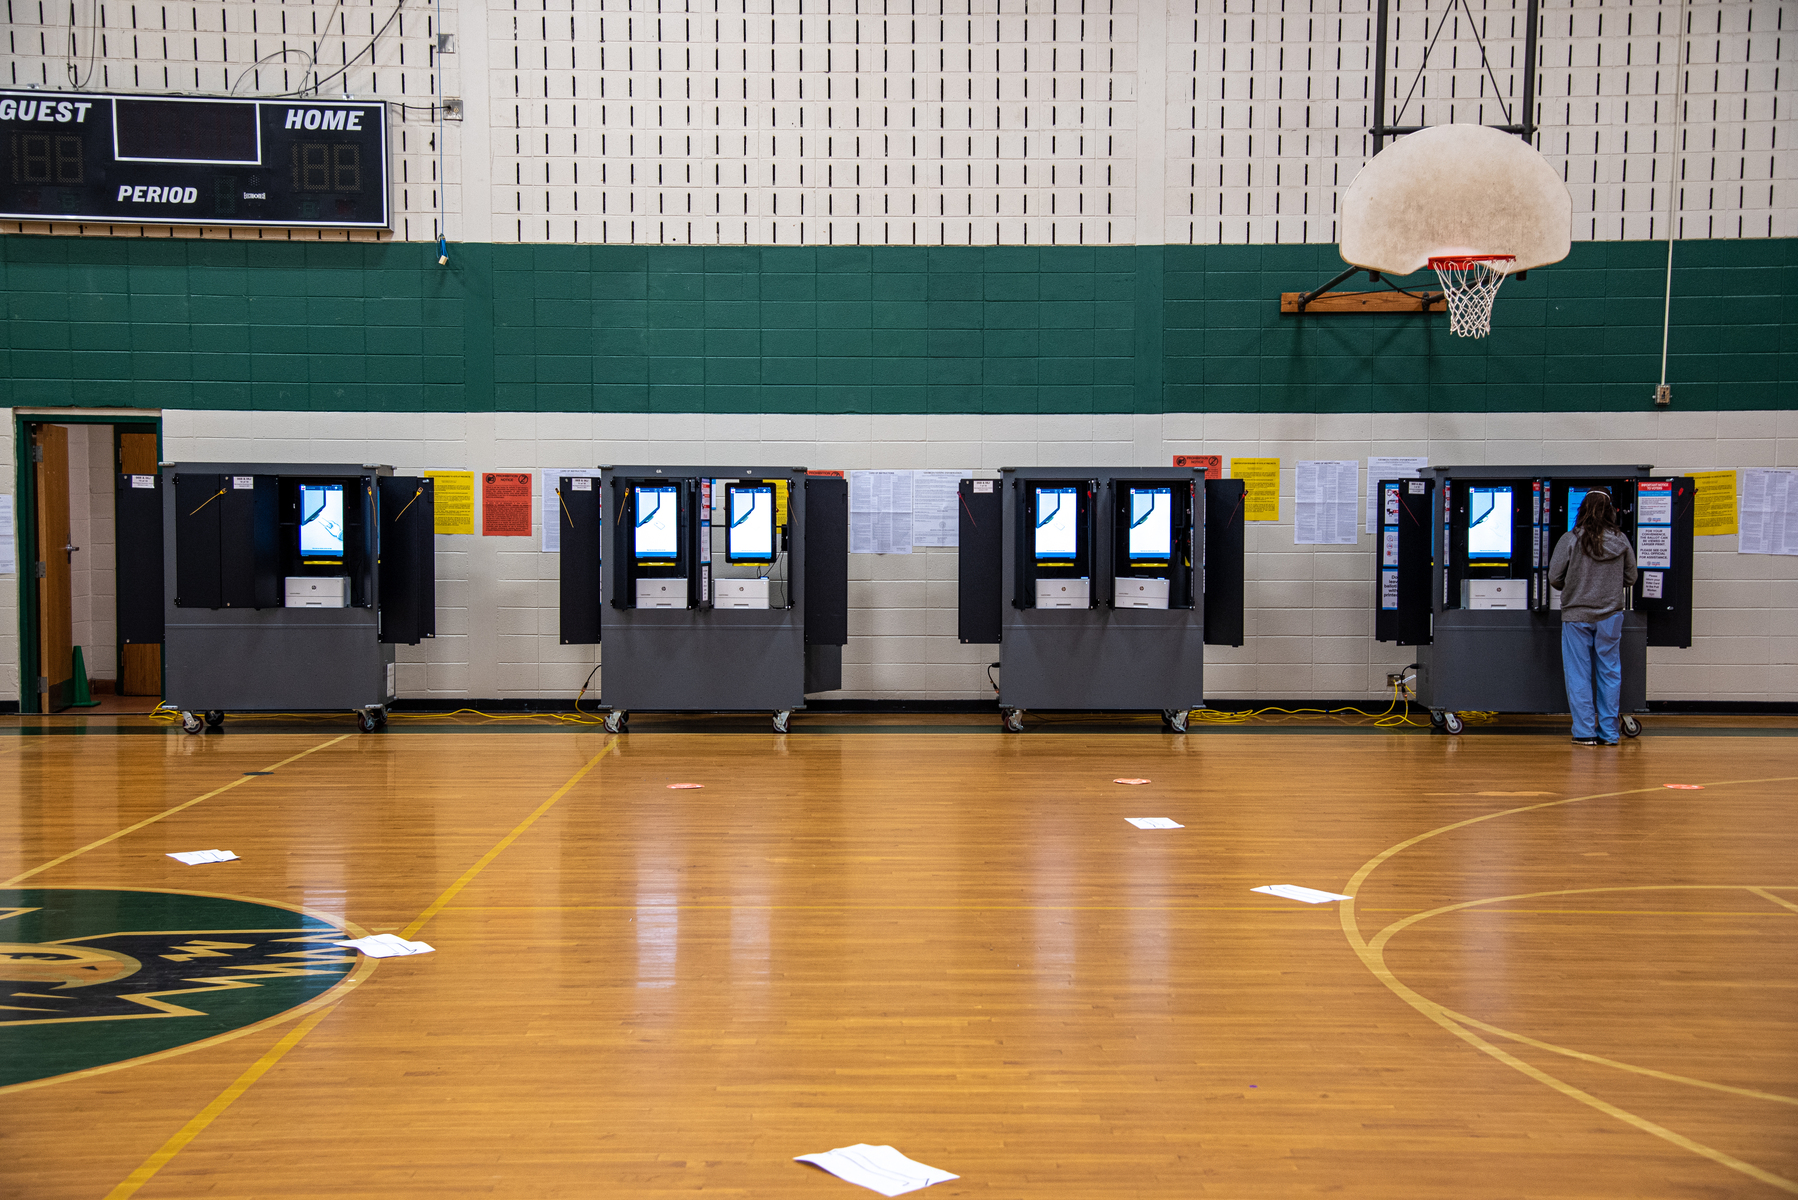 January 5, 2021 – Atlanta, GA. A voter cast their vote during the U.S. Senate run-off race.